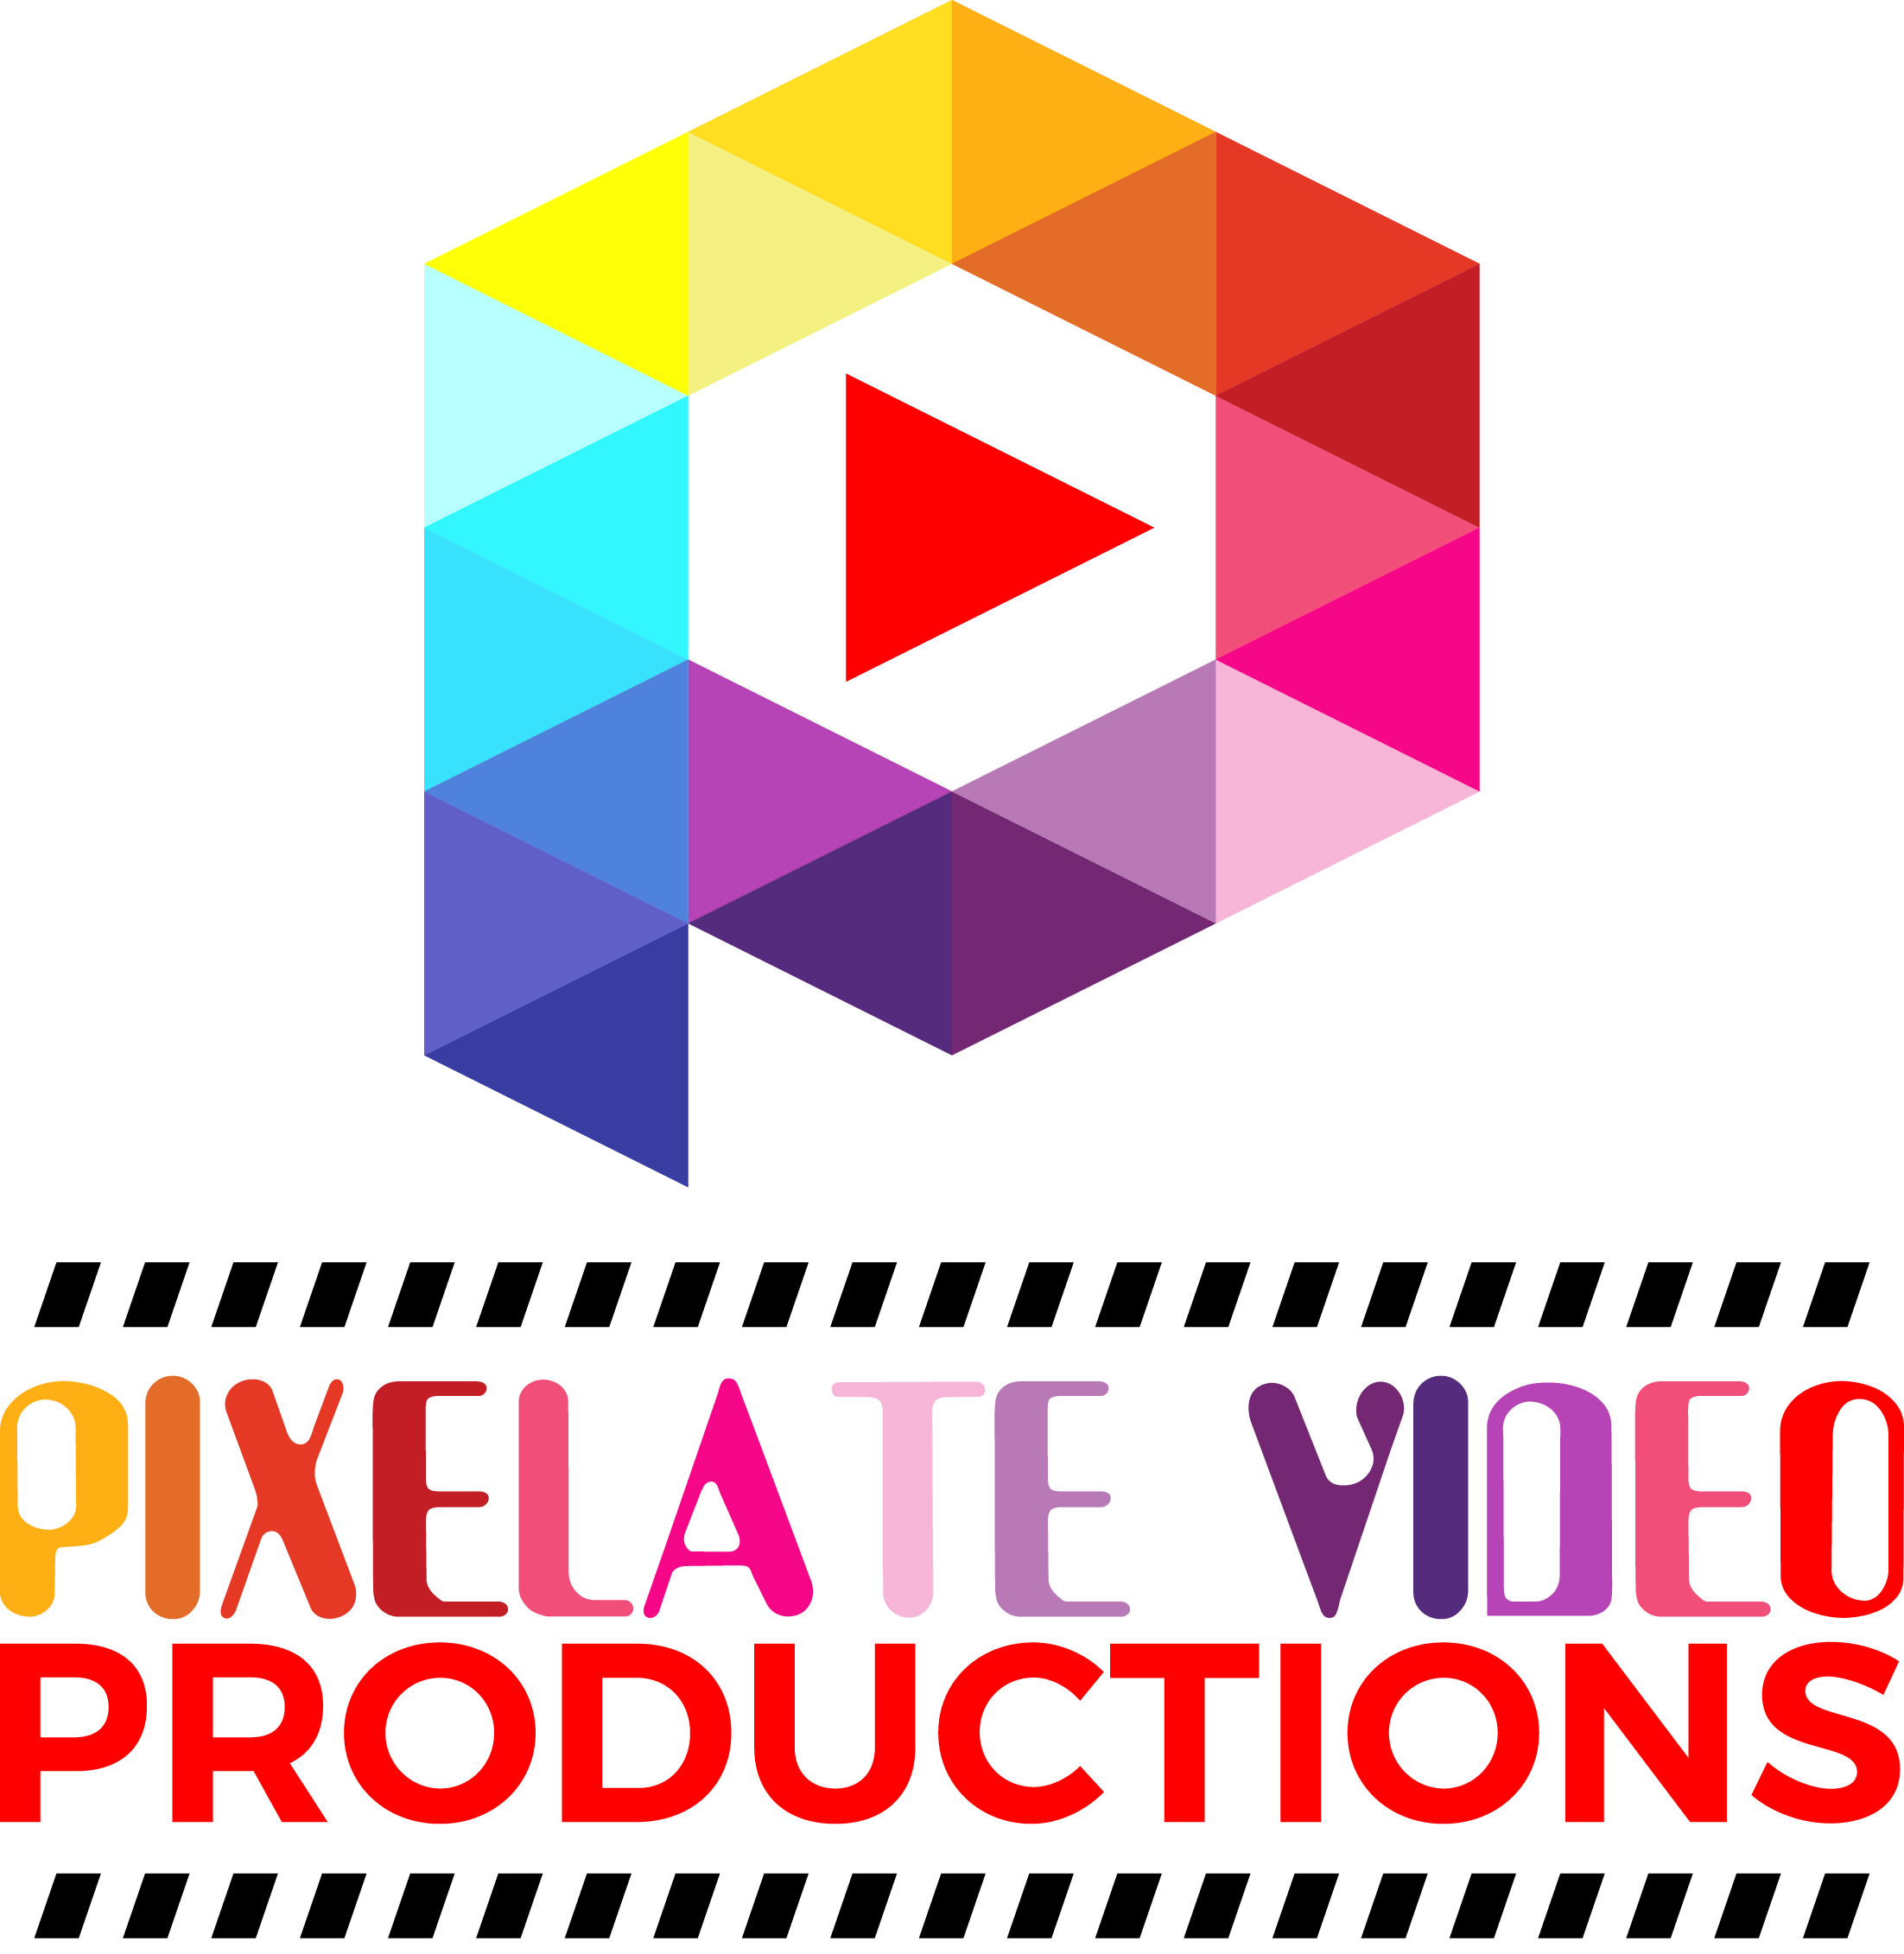 Pixelate Video Productions